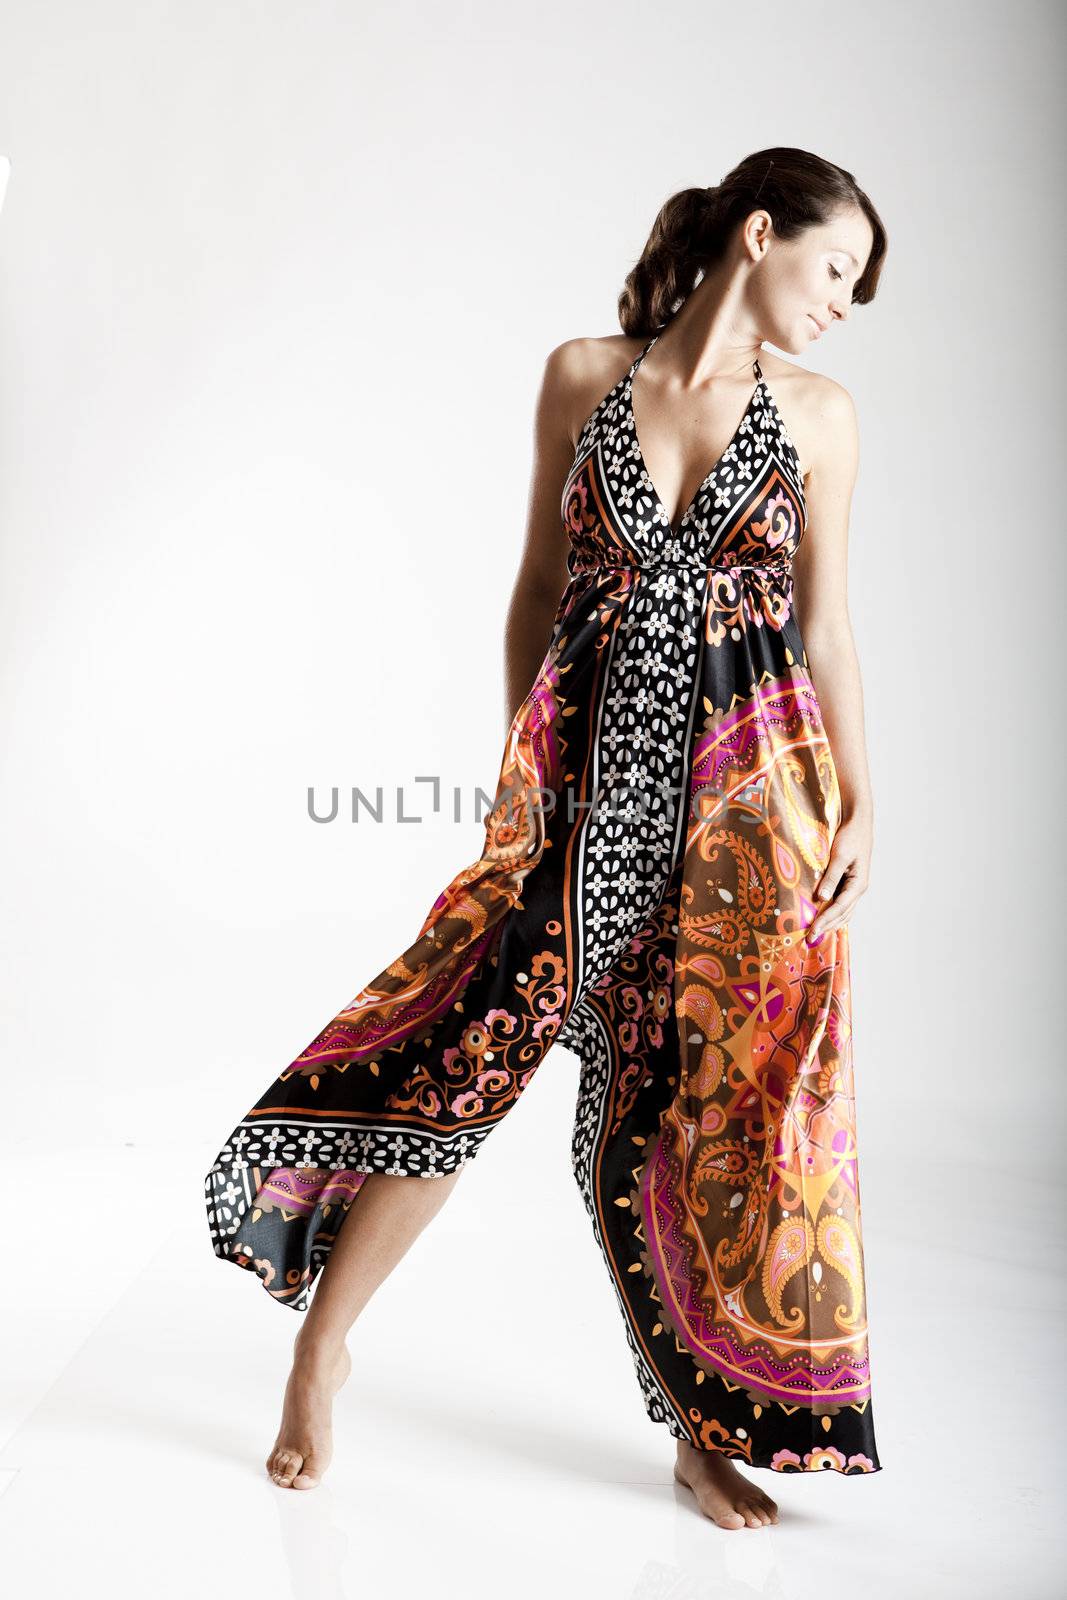 Beautiful fashion woman posing with a colorful dress